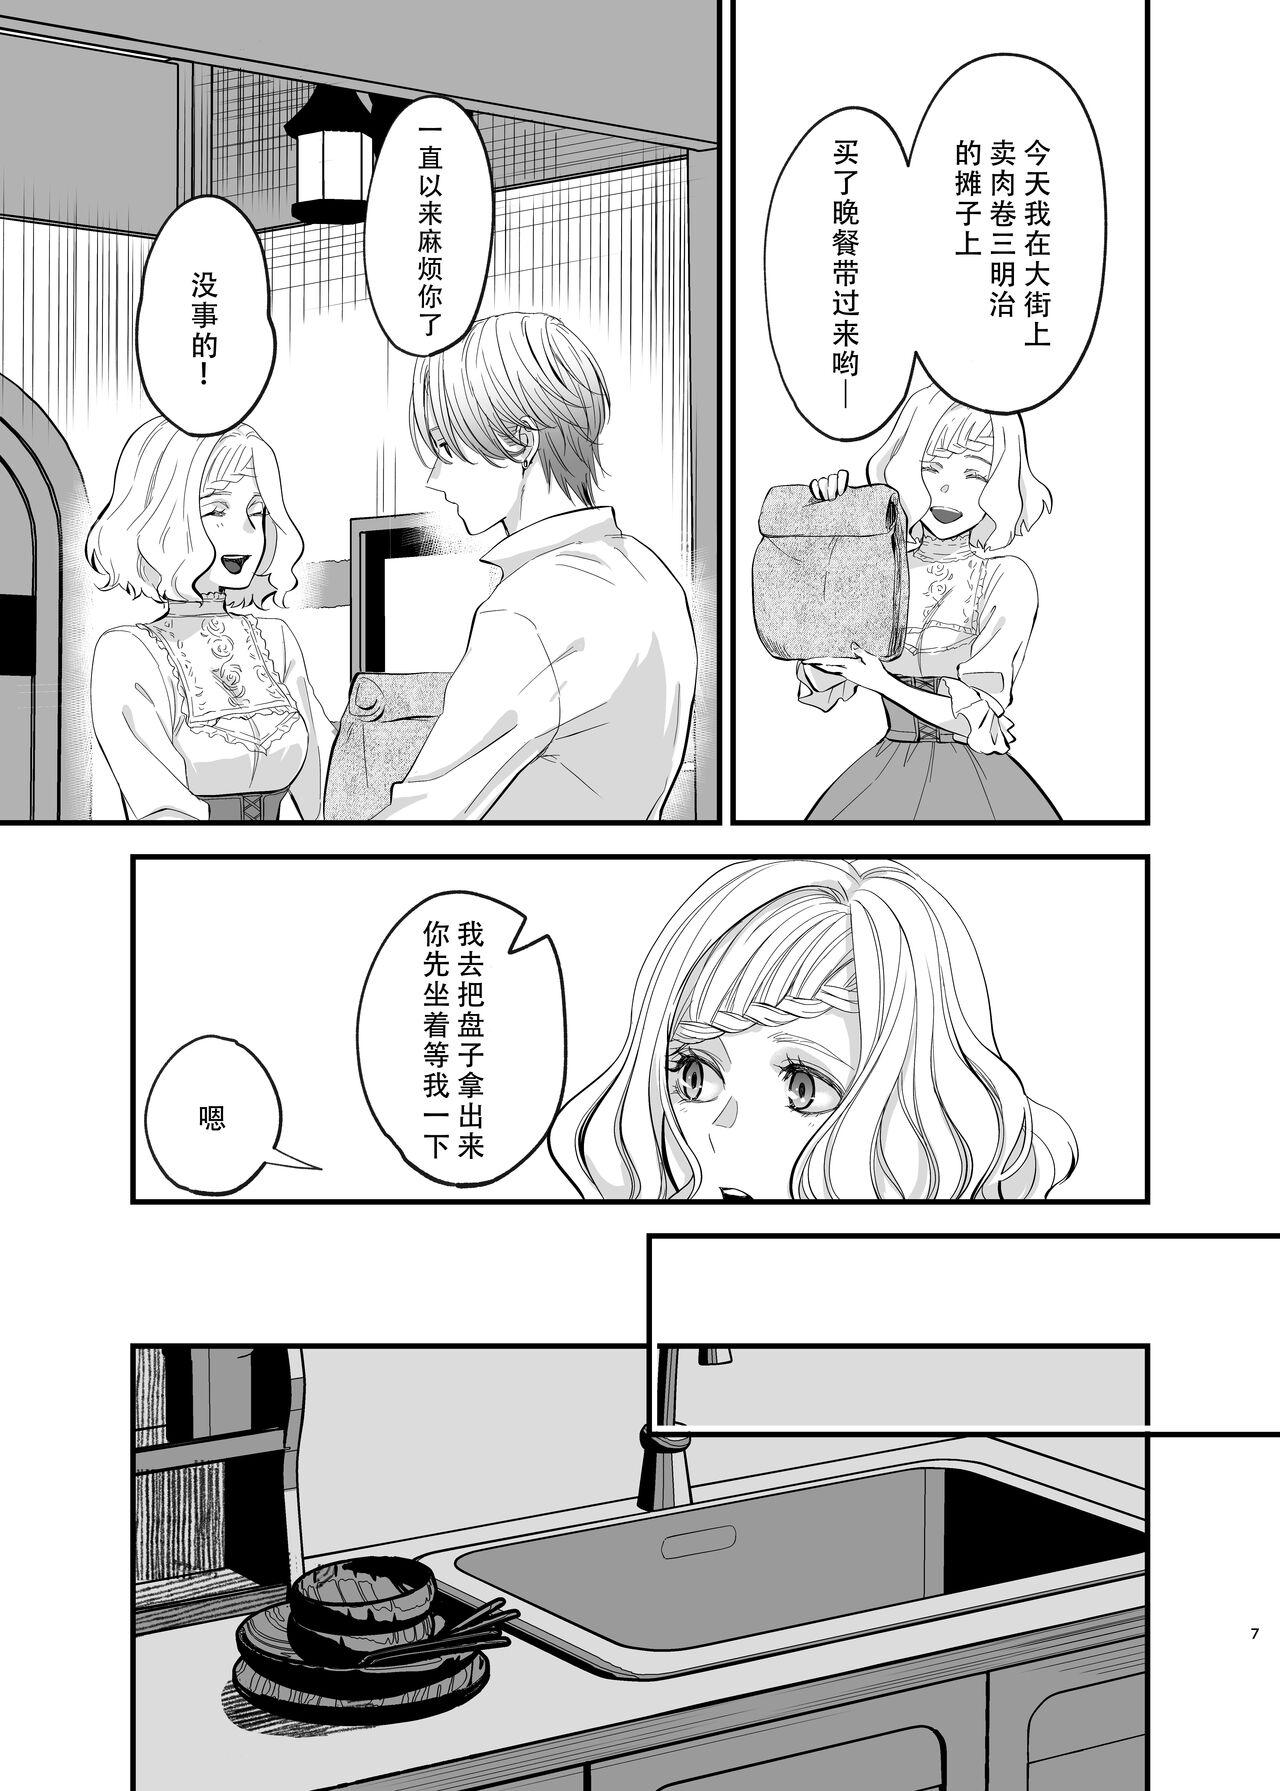 Mms oyasumiitoshiihito | 晚安 我心爱的人 - Original Fit - Page 7